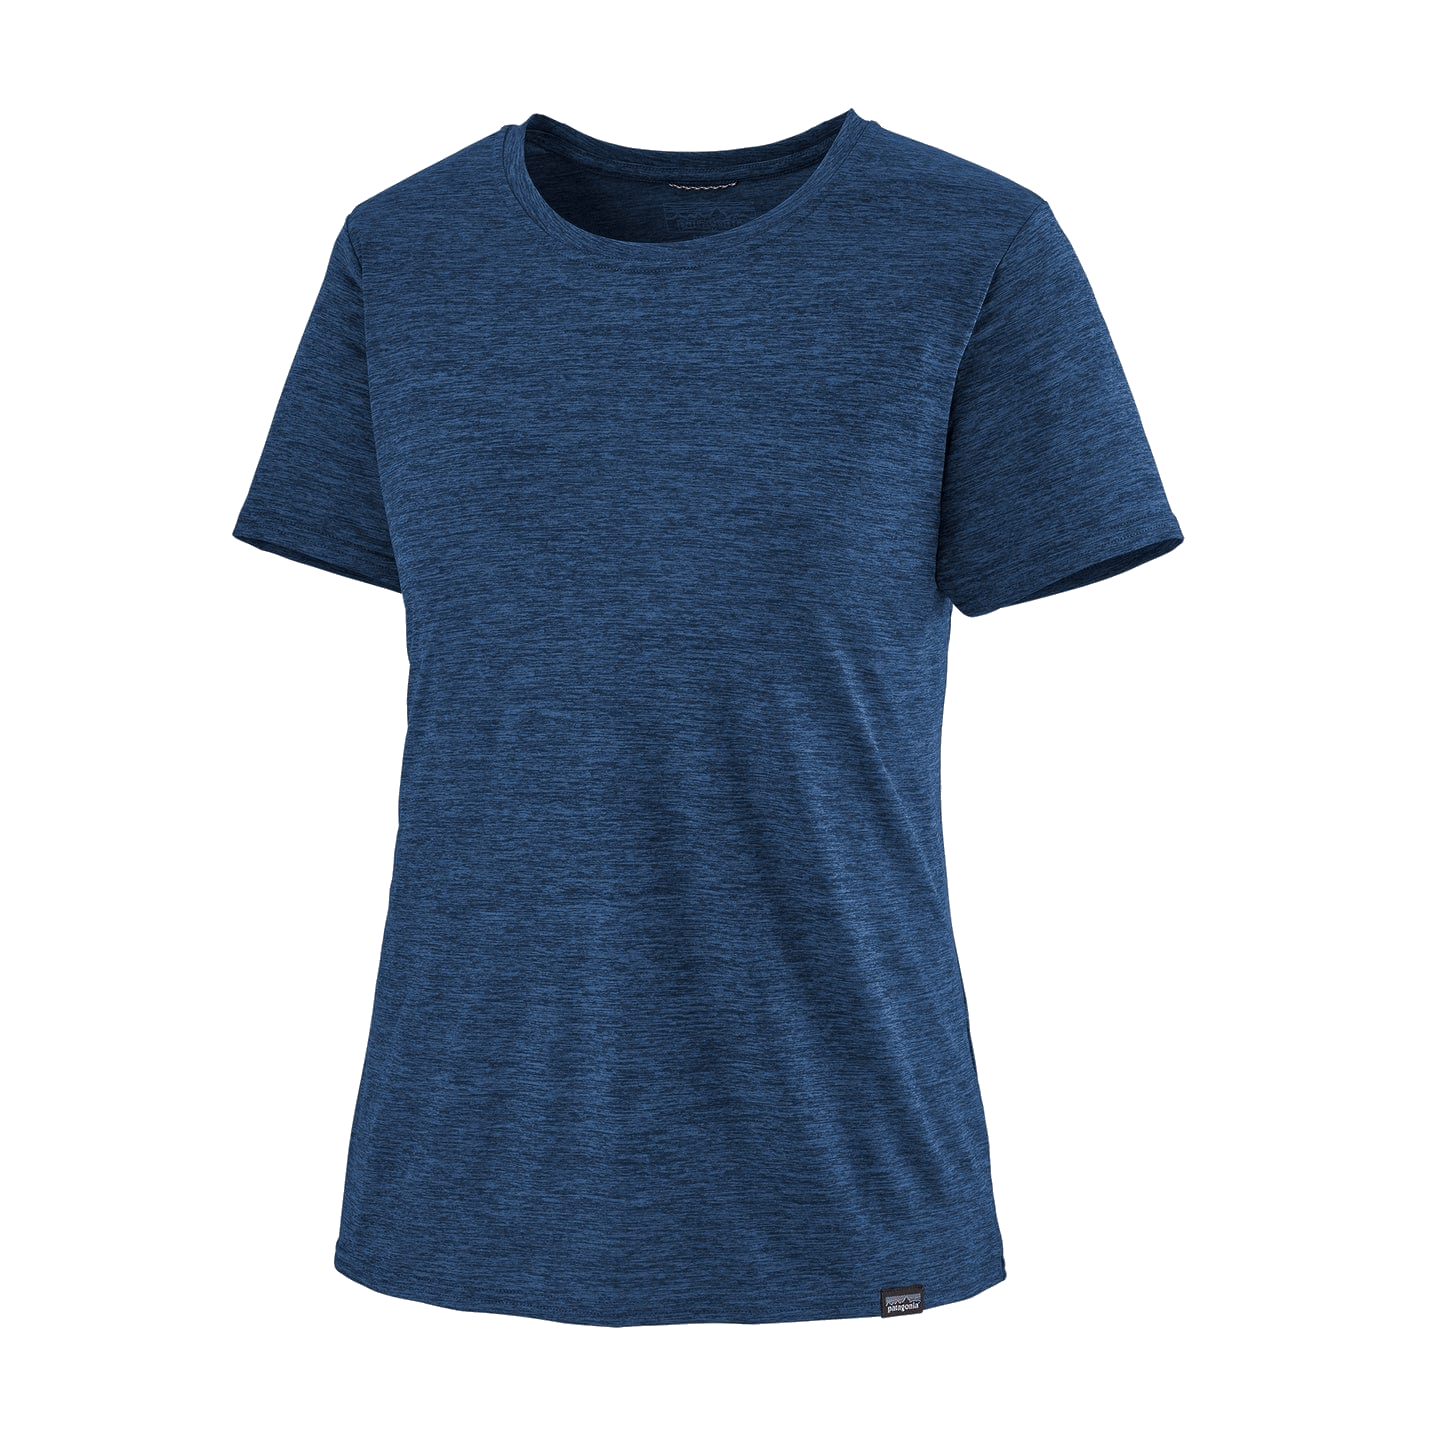 Patagonia T-shirts XS / Viking Blue/Navy Blue Patagonia - Women's Short Sleeve Capilene® Cool Daily Shirt